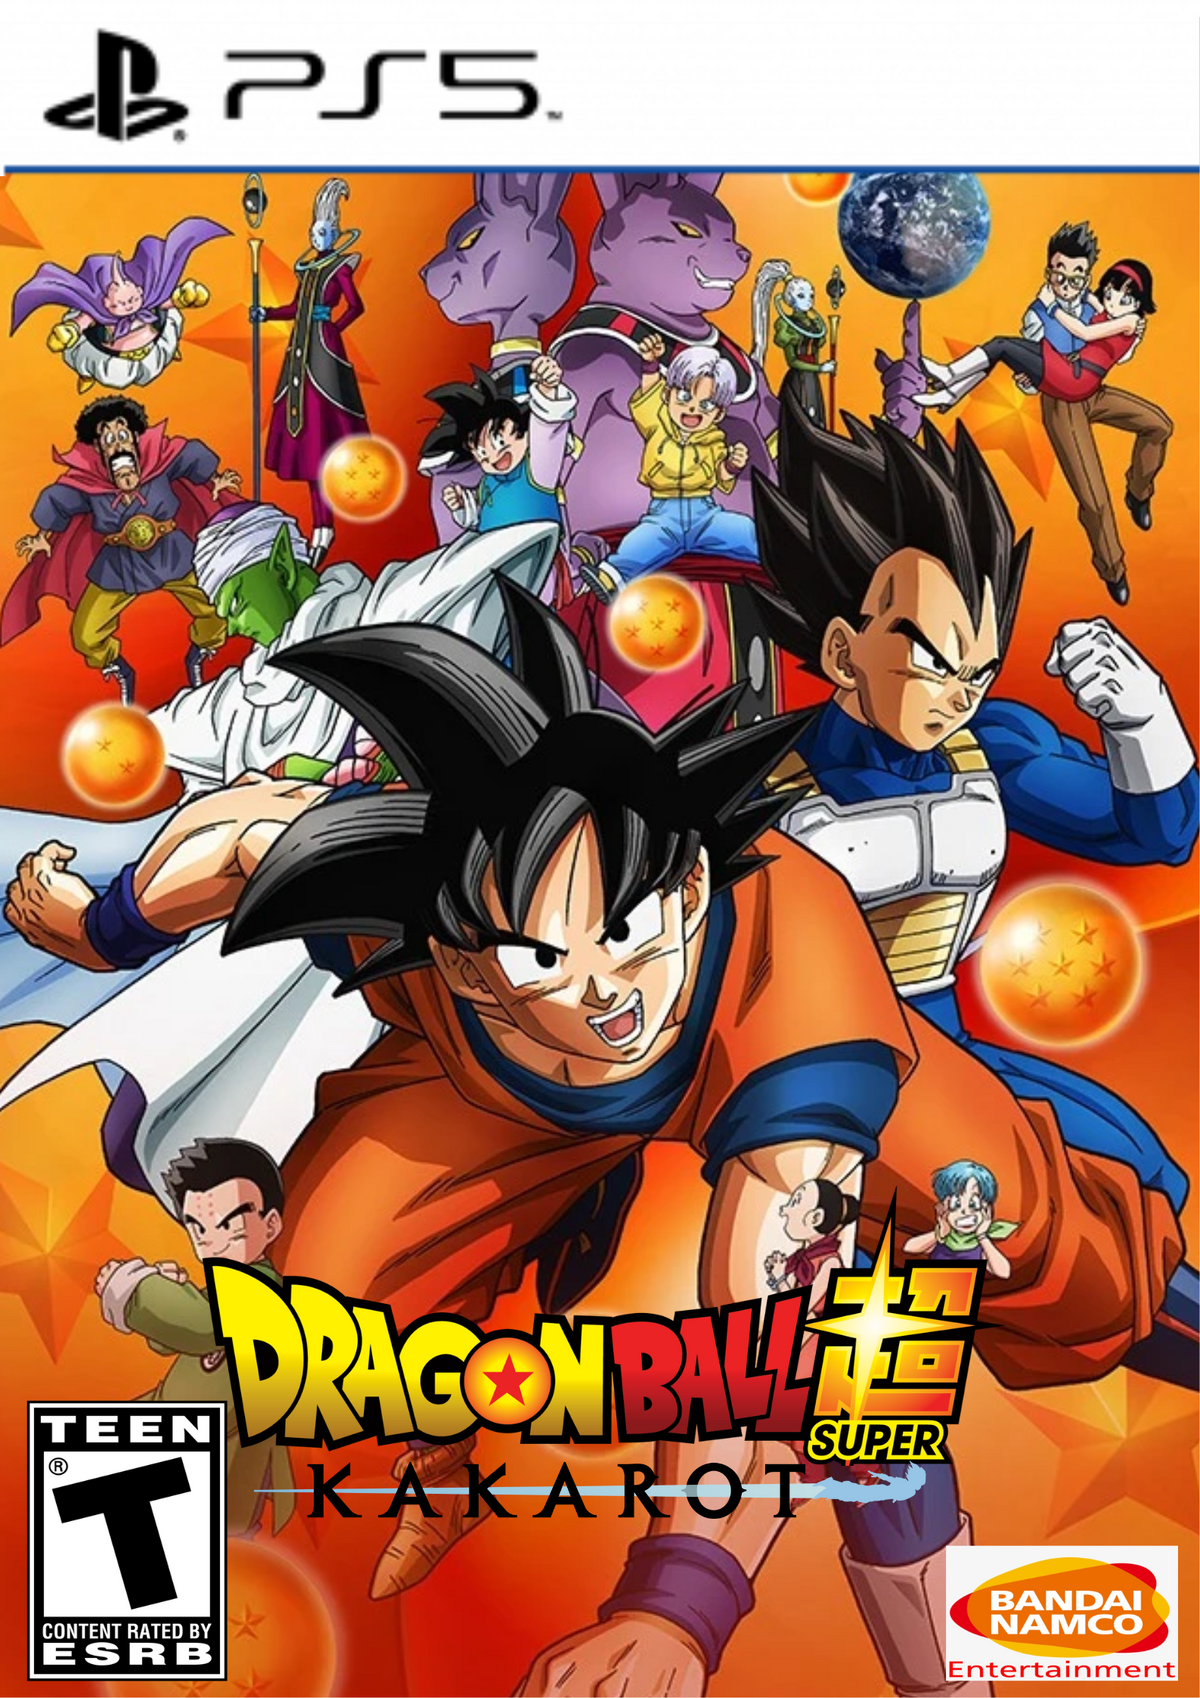 Goku, DragonballZ:Kakarot Wiki